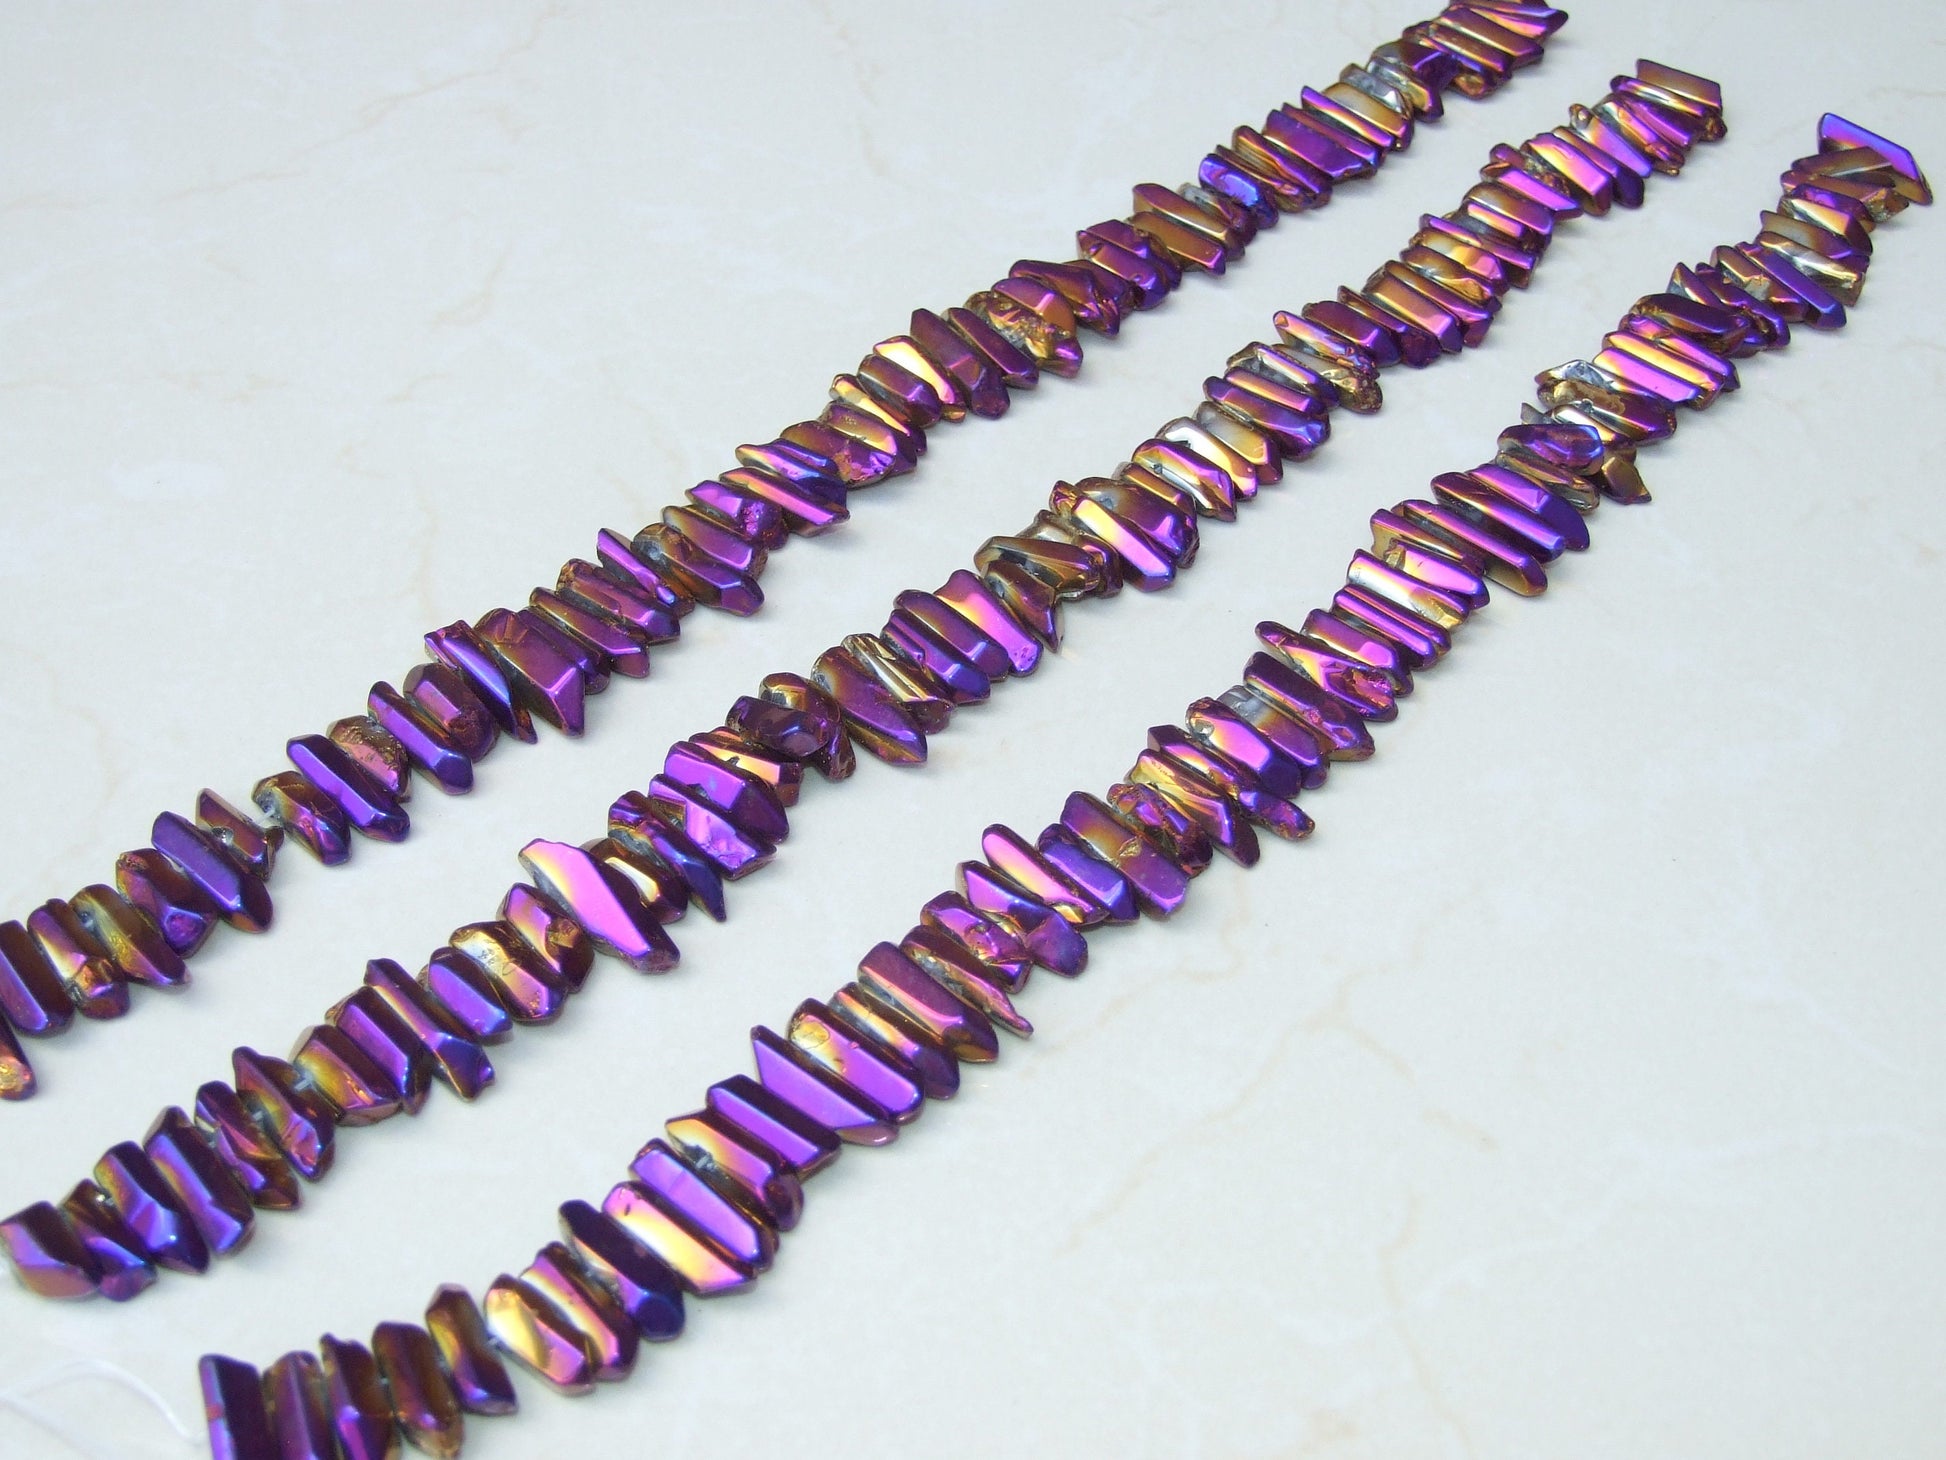 Polished Purple & Gold Titanium Quartz Points, Quartz Crystal, Crystals Points, Crystal Quartz, Mardi Gras - Gemstones Beads - 20mm - 28mm